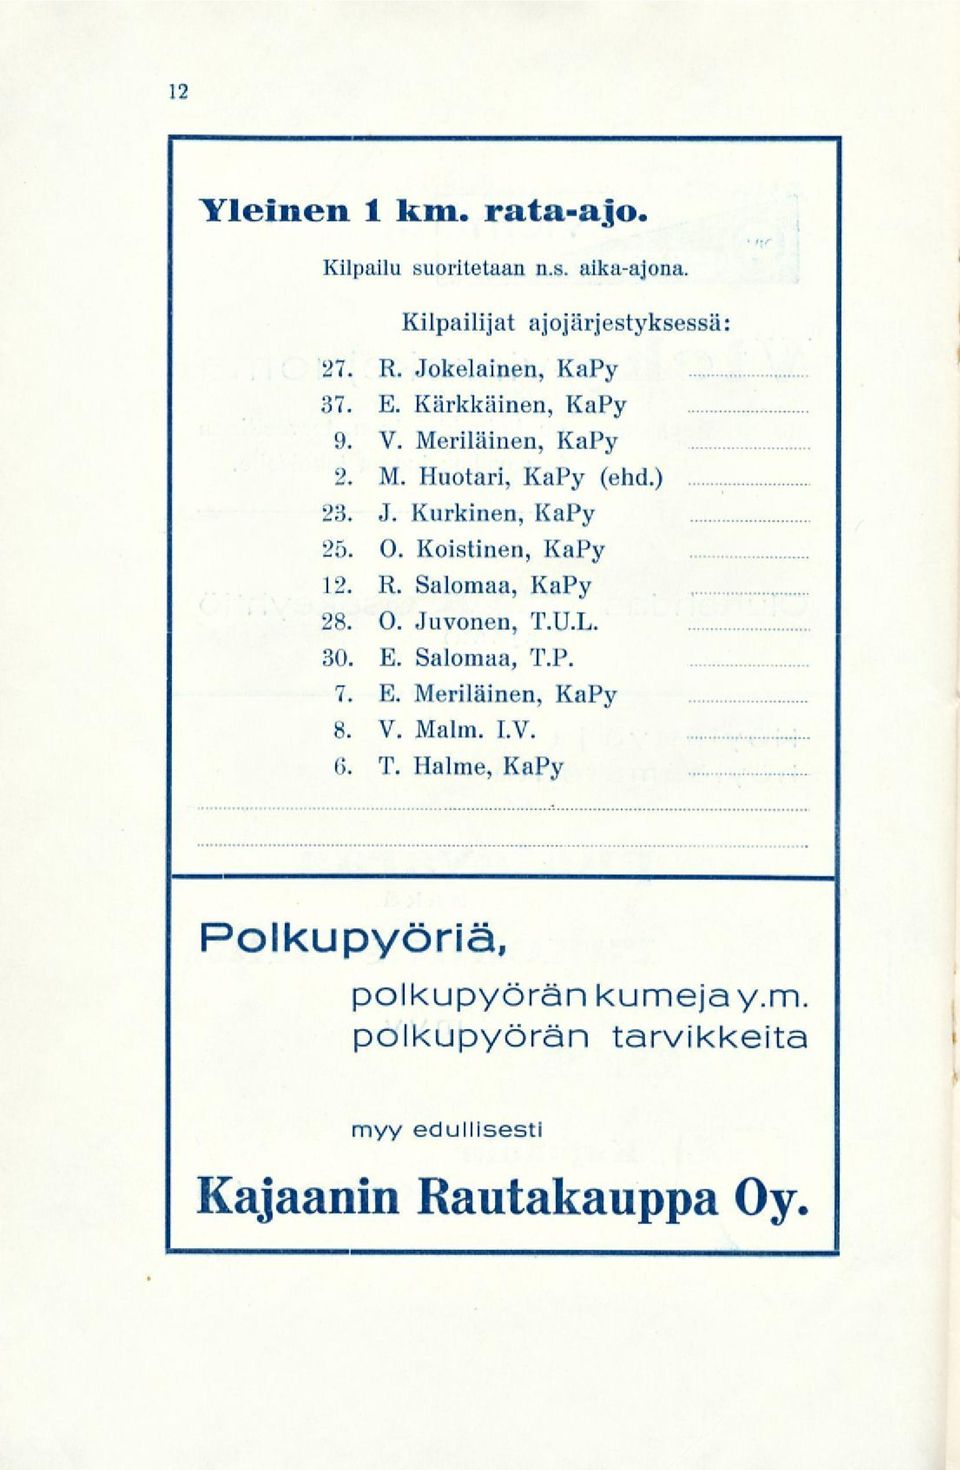 0. Koistinen, KaPy 12. R. Salomaa, KaPy 28. 0. Juvonen, T.U.L. 30. E. Salomaa, T.P. 7. E. Meriläinen, KaPy 8. V.